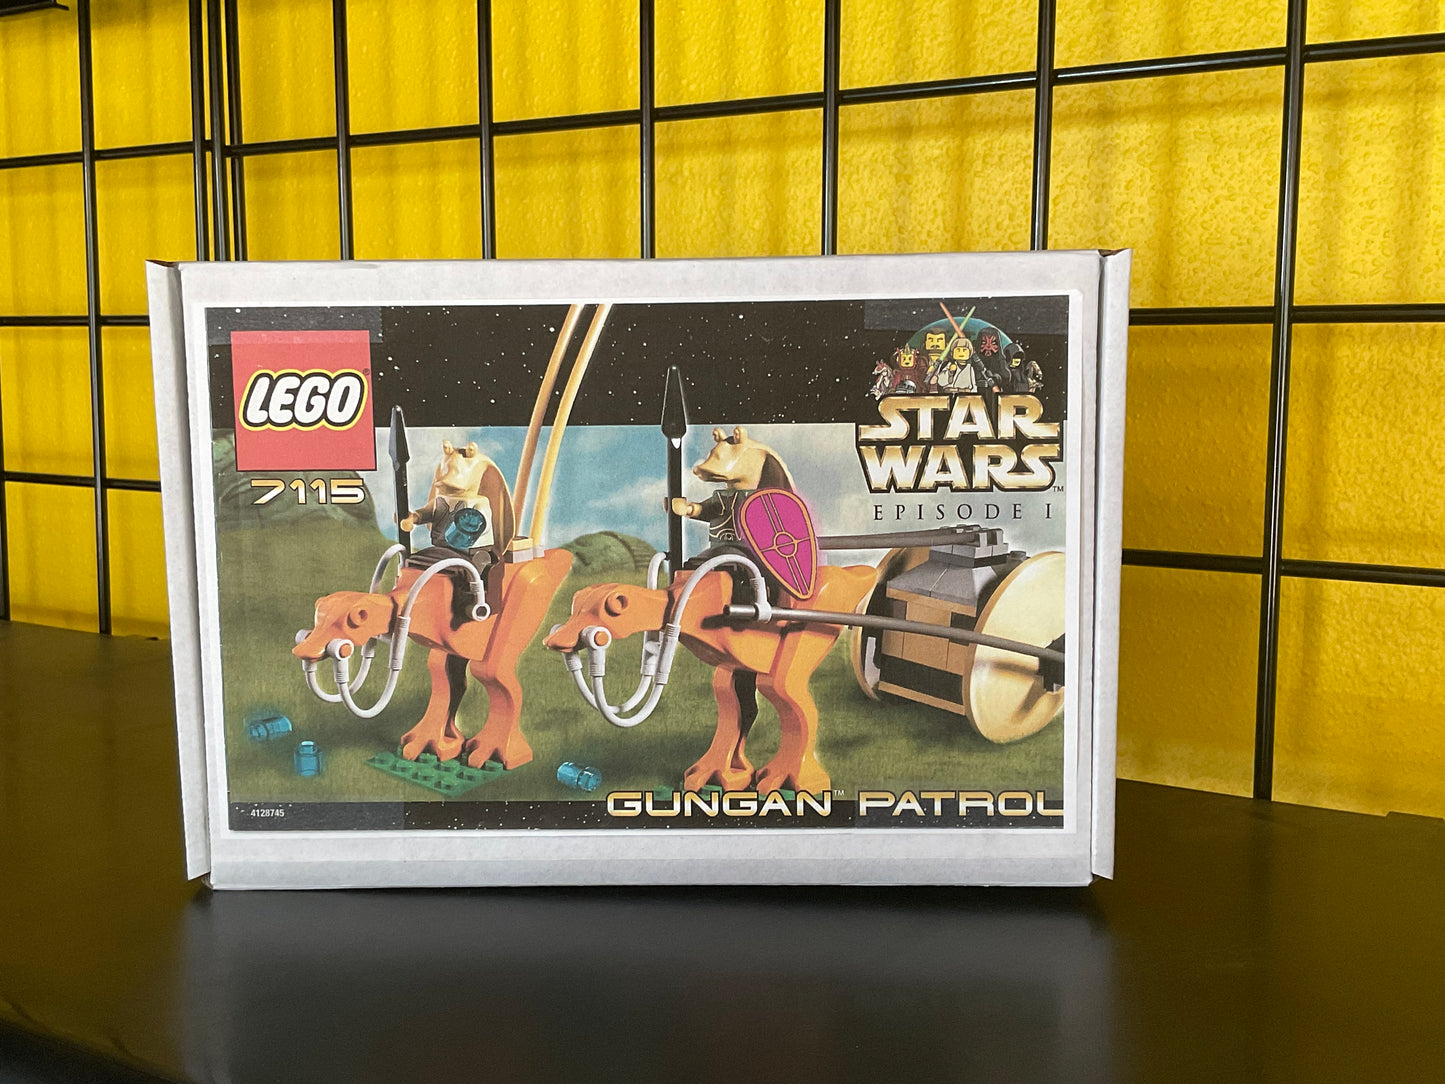 LEGO 7115 Gungan Patrol - Certified